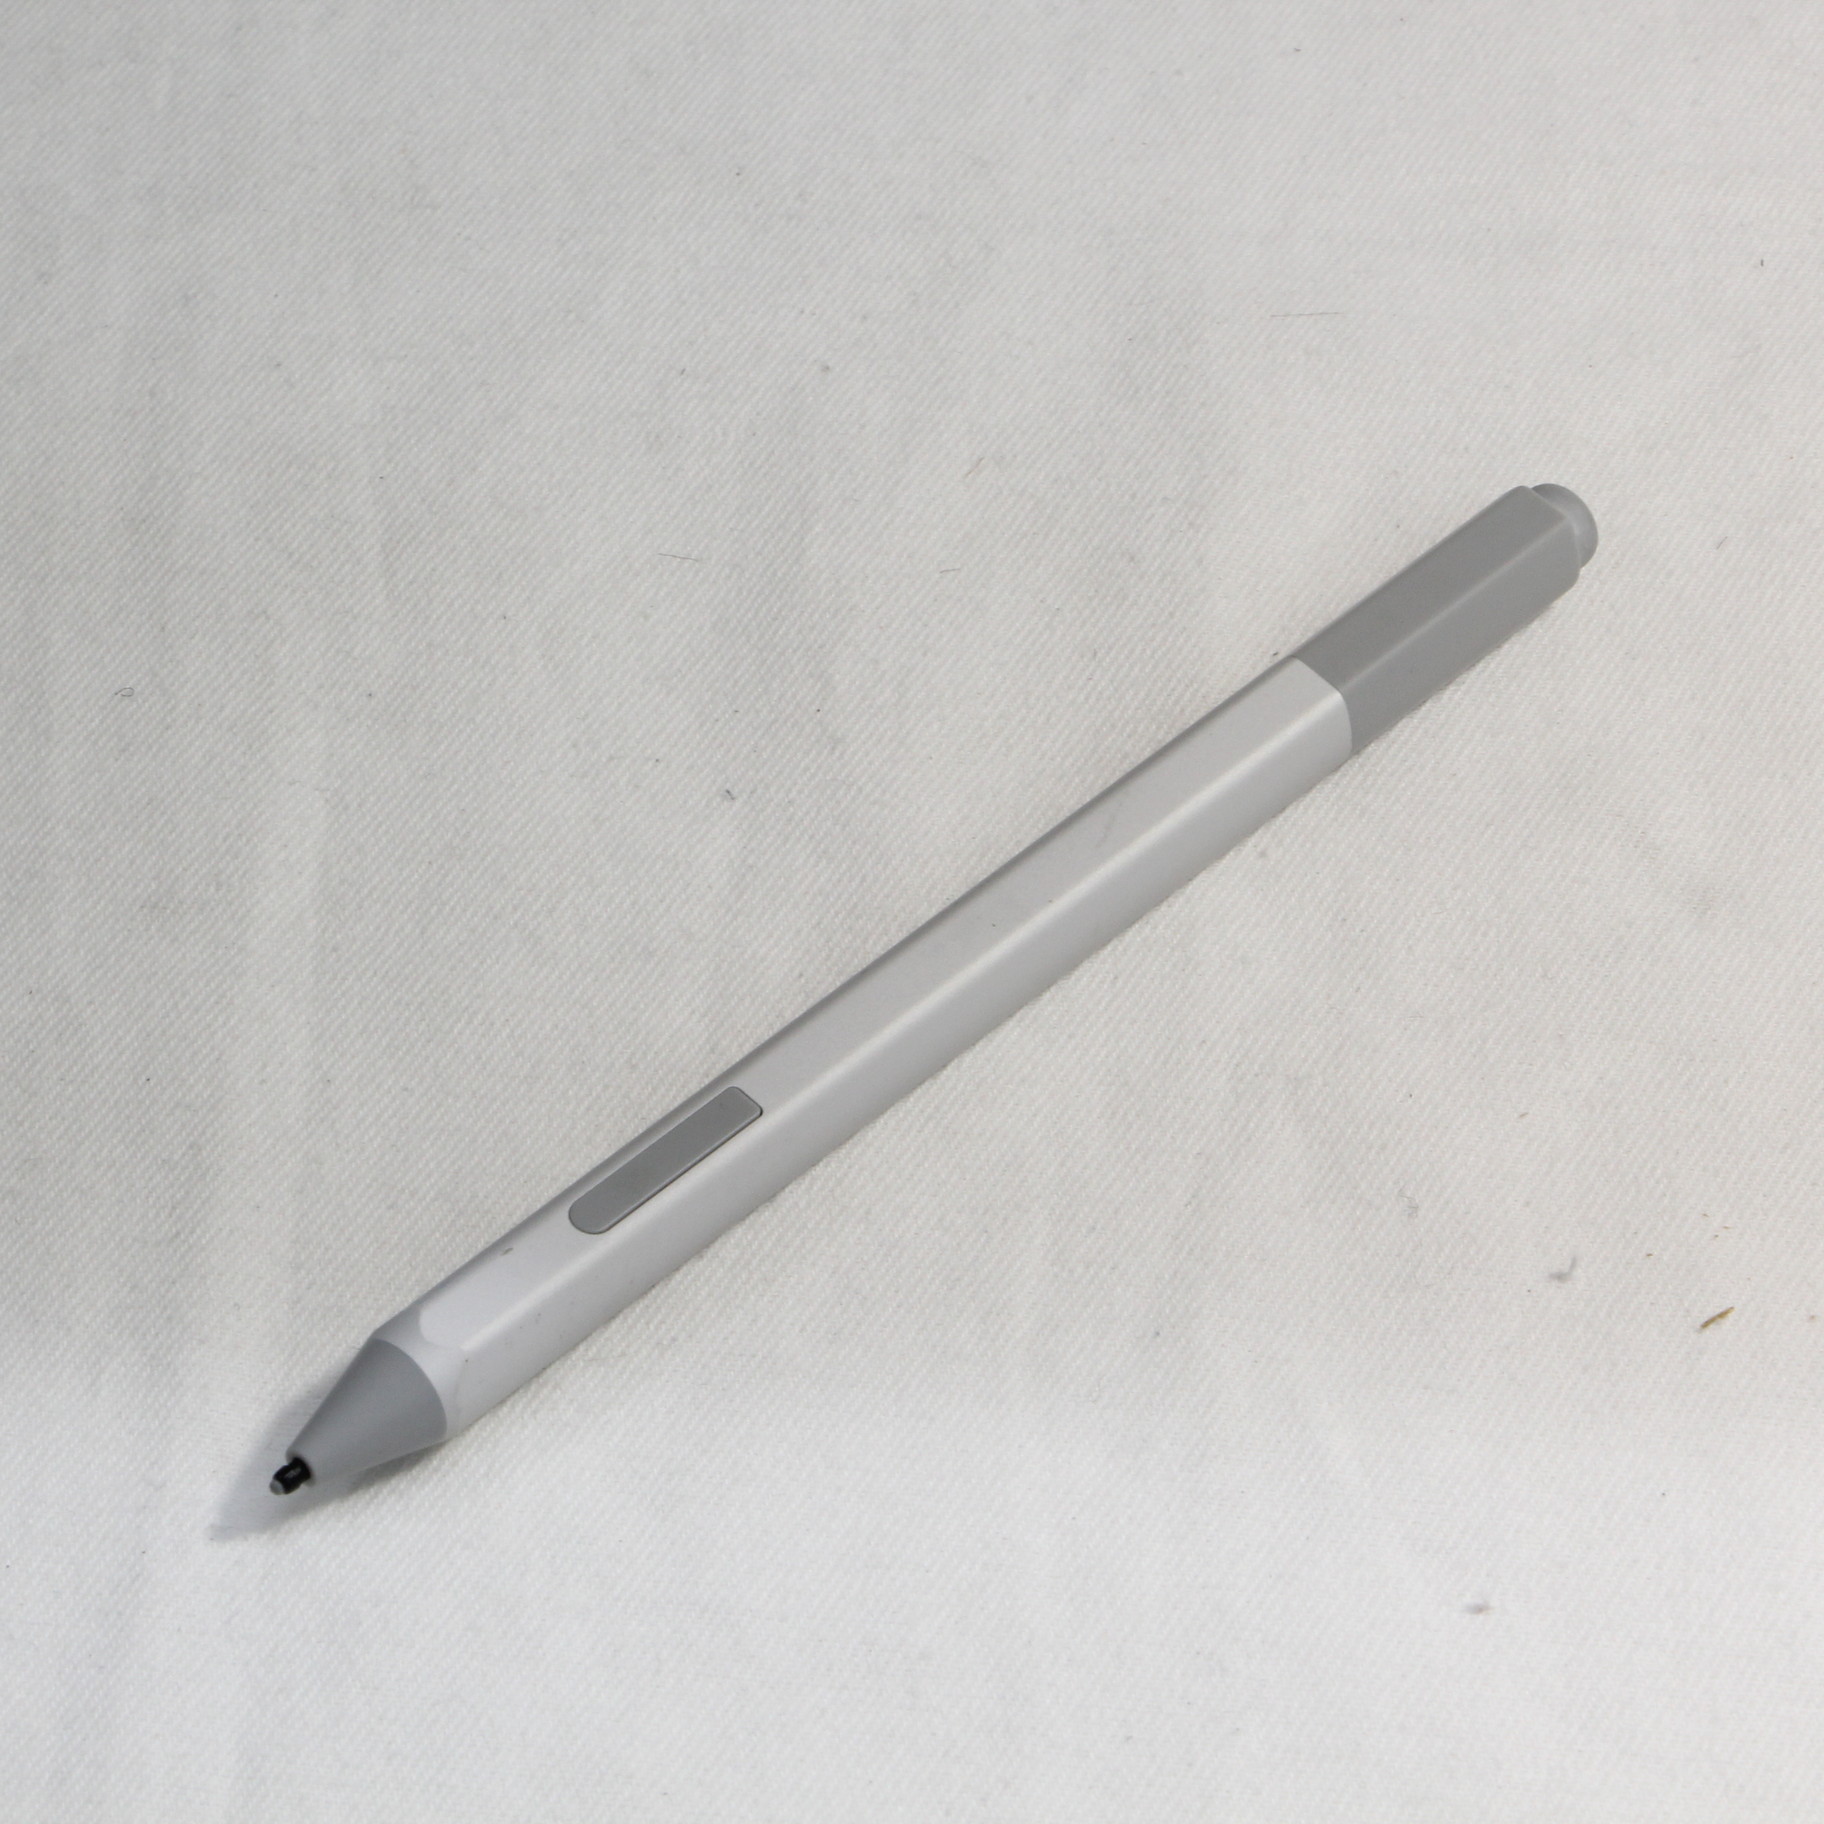 Microsoft Surface Pen EYU-00015 プラチナ